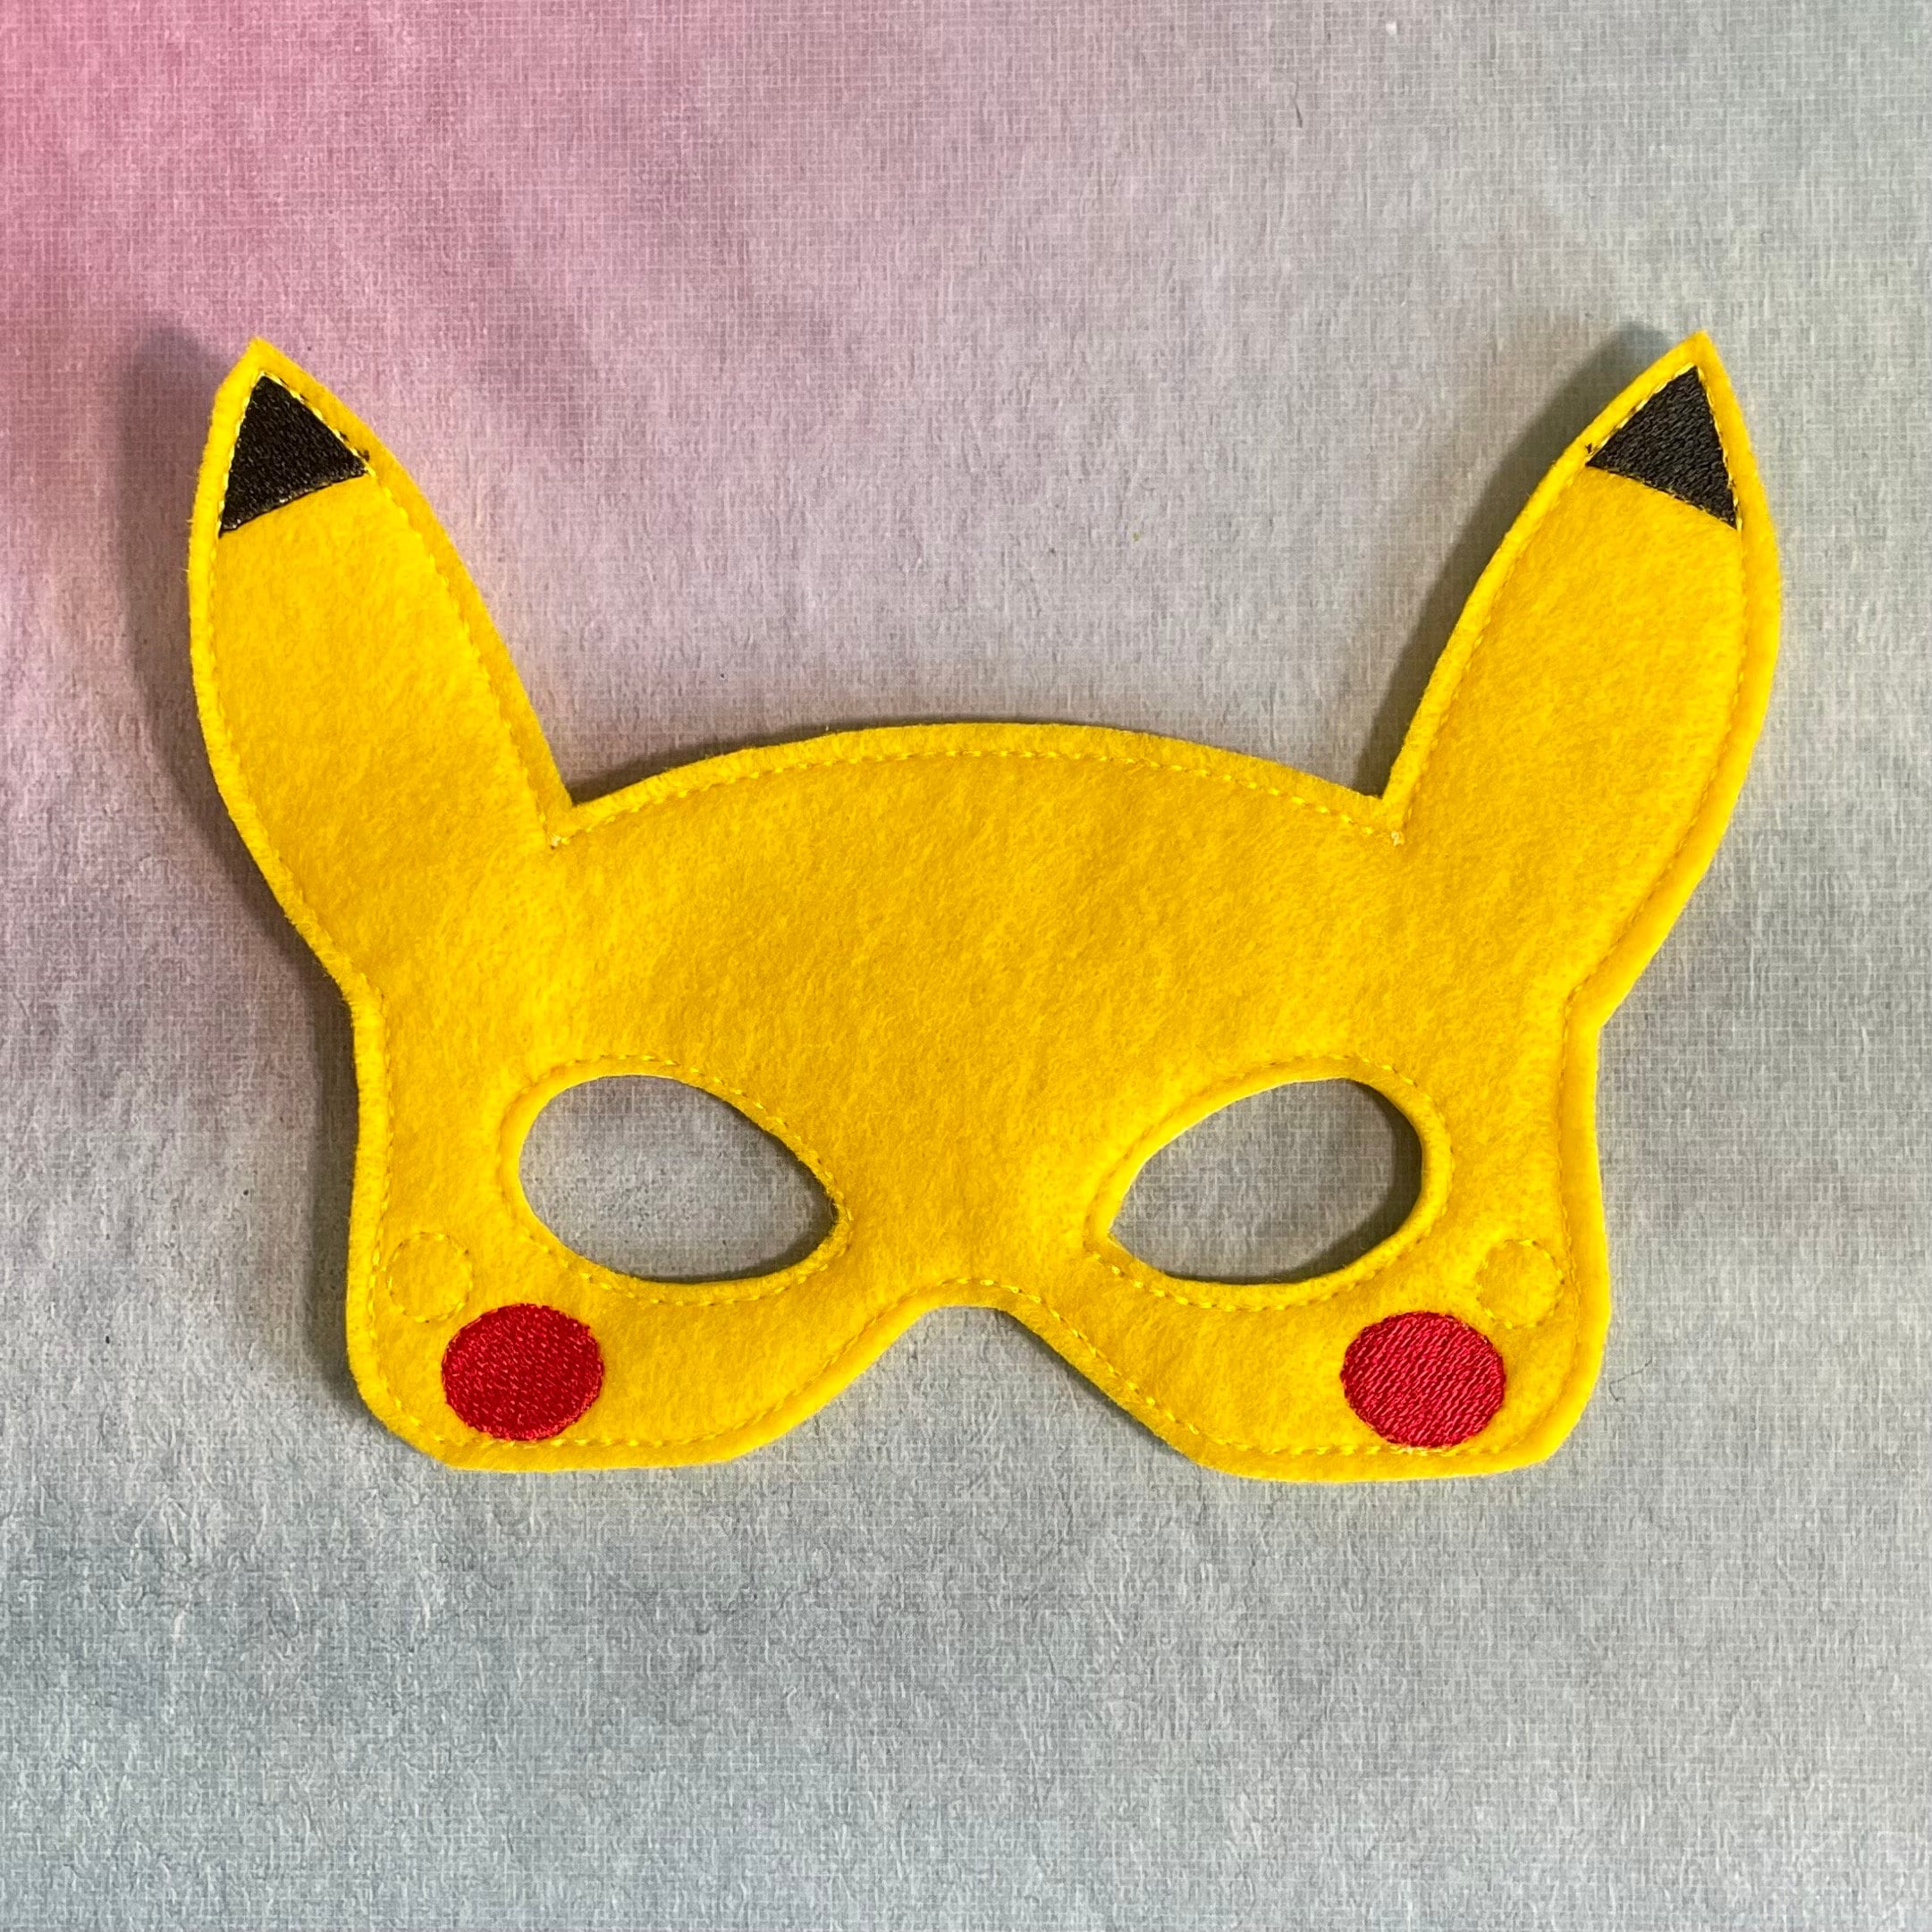 Pin by Samantha on Holiday;Party;Birthday  Pikachu halloween costume,  Pikachu costume women, Pikachu costume